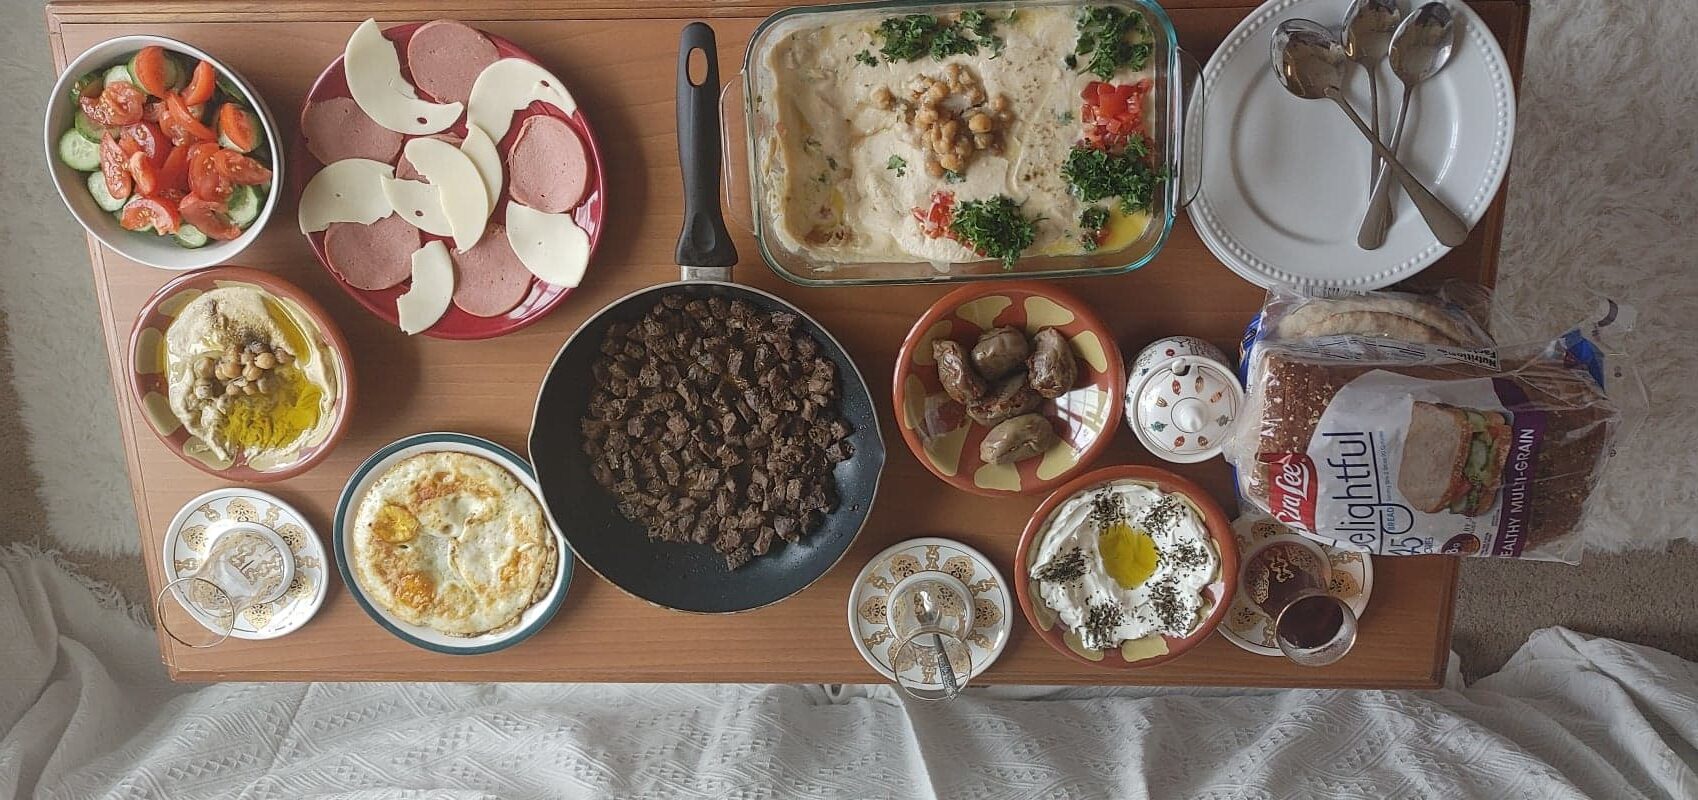 The Arab Kitchen: Preparing Food, a Source of Mental Wellness